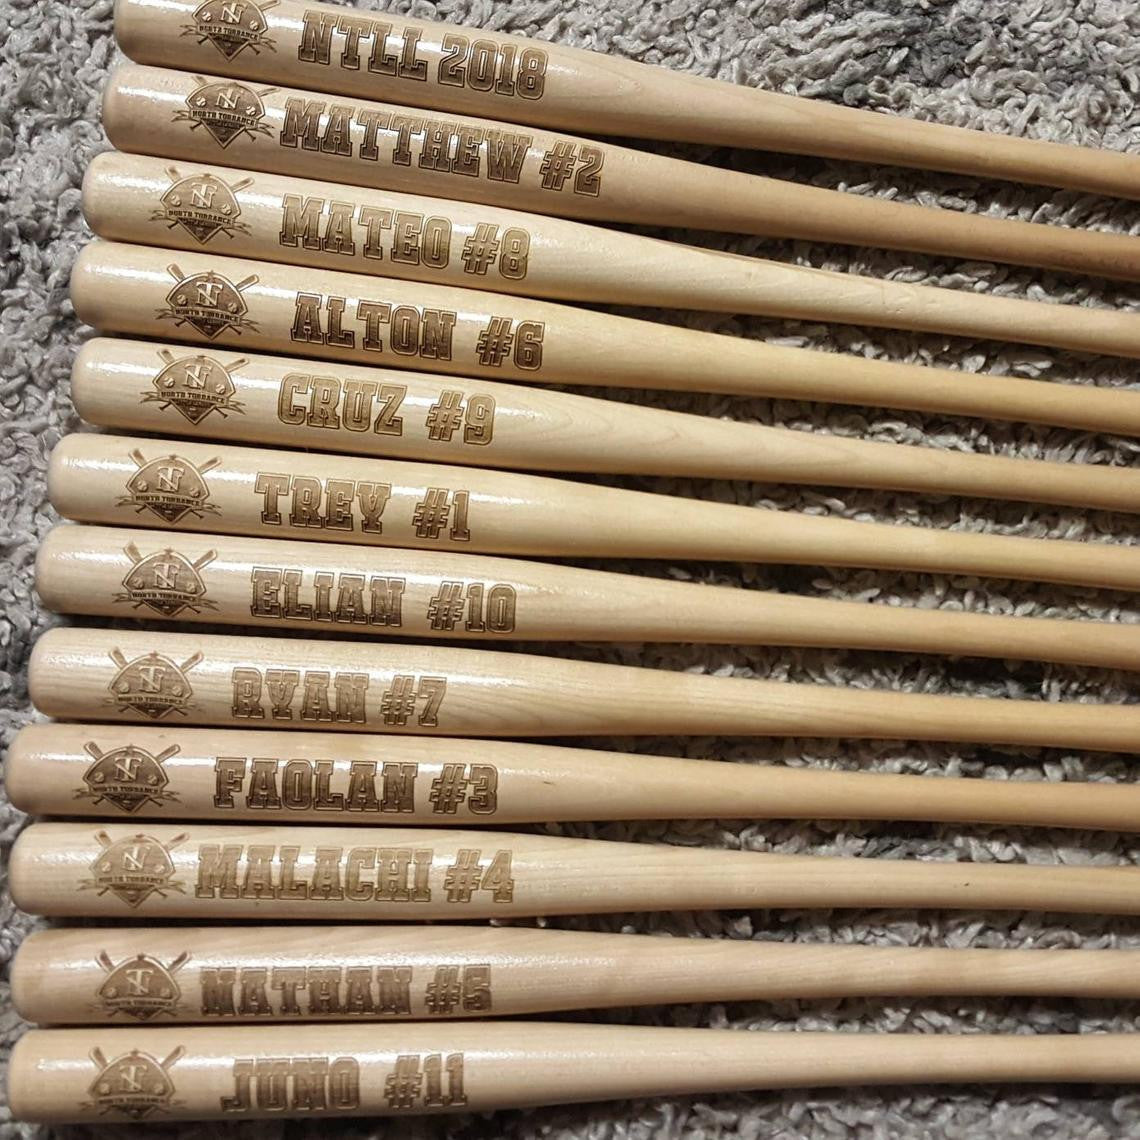 6 miniature wood baseball bats